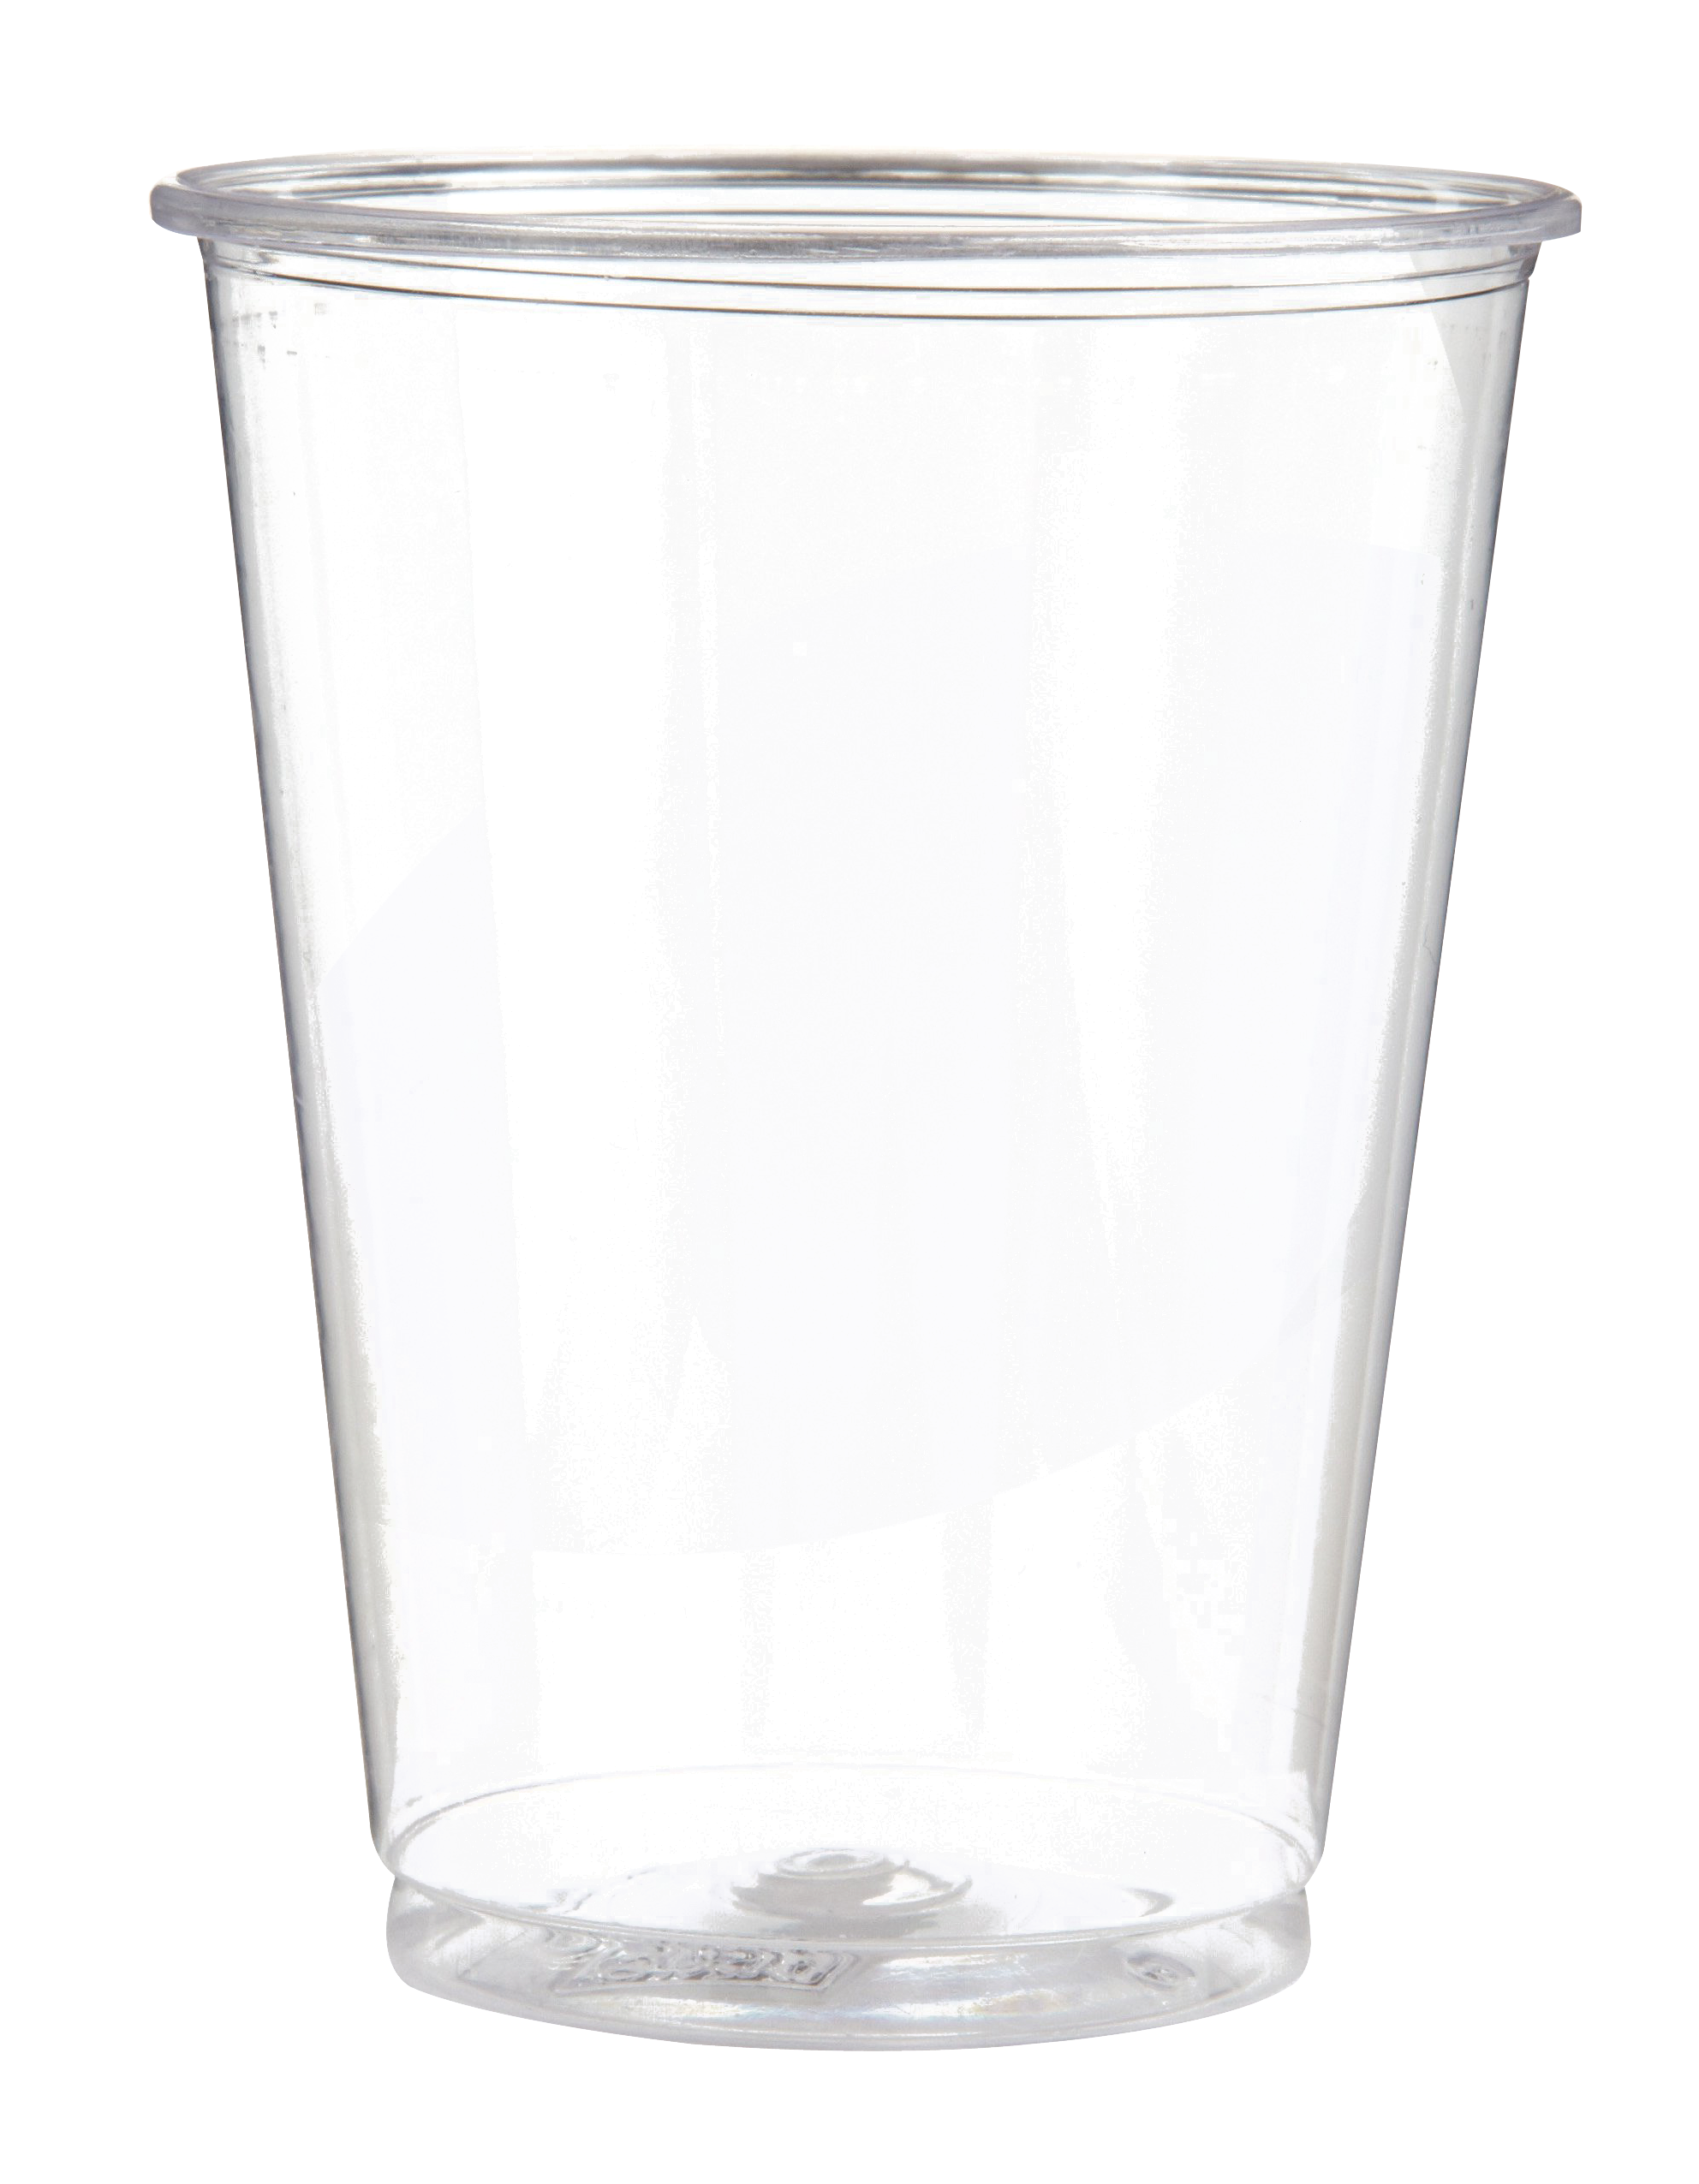 Plastic Cup Png Transparent Image - Cup, Transparent background PNG HD thumbnail